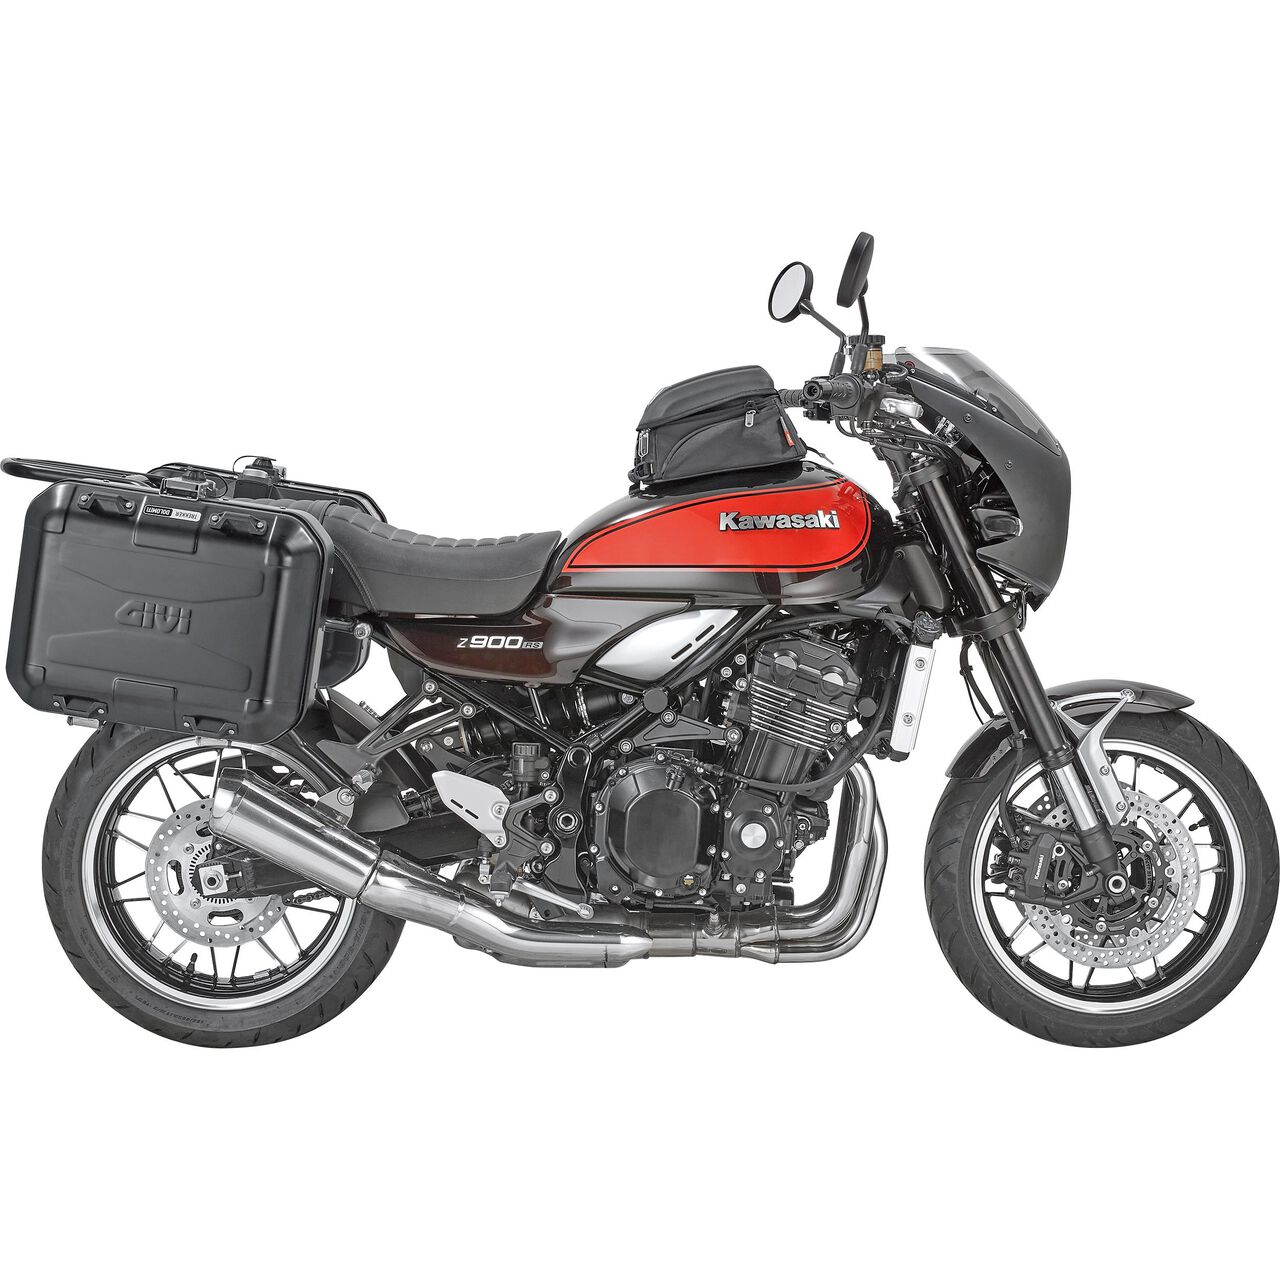 Givi side rack Monokey® nGT PL4124 for Kawasaki 900 RS for EUR 163.50 | POLO Motorrad